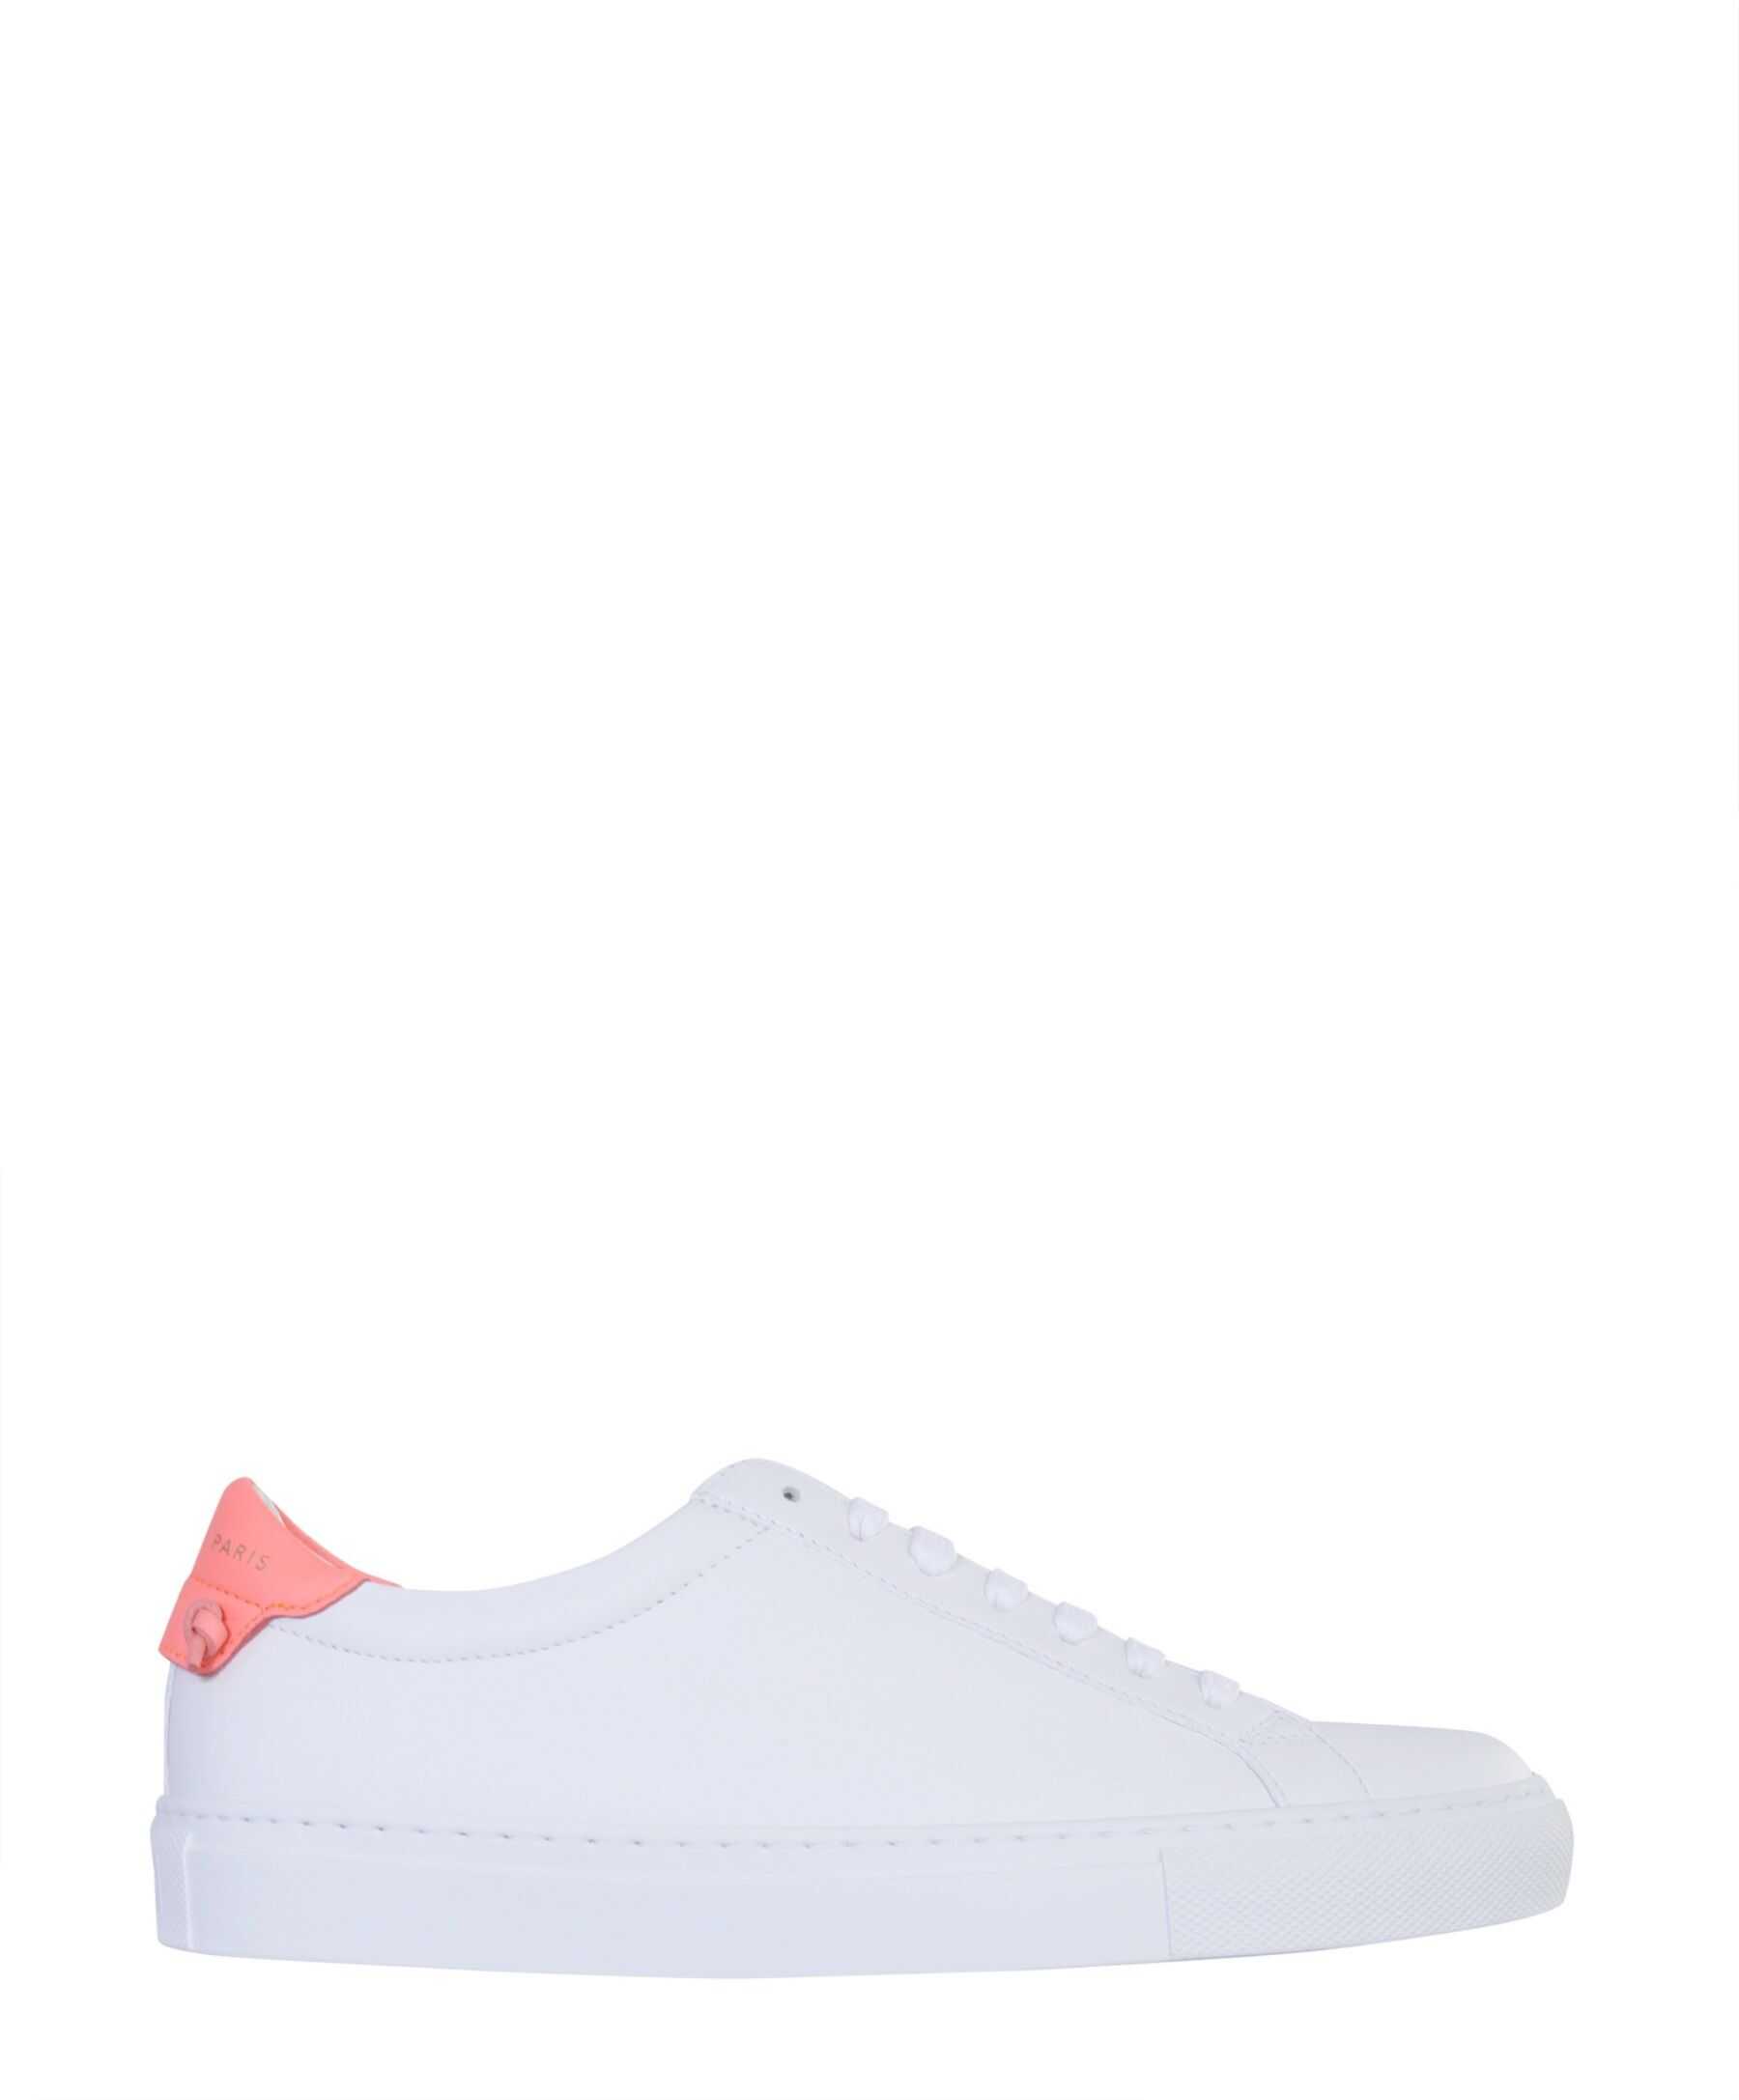 Givenchy "Urban Street" Sneakers WHITE